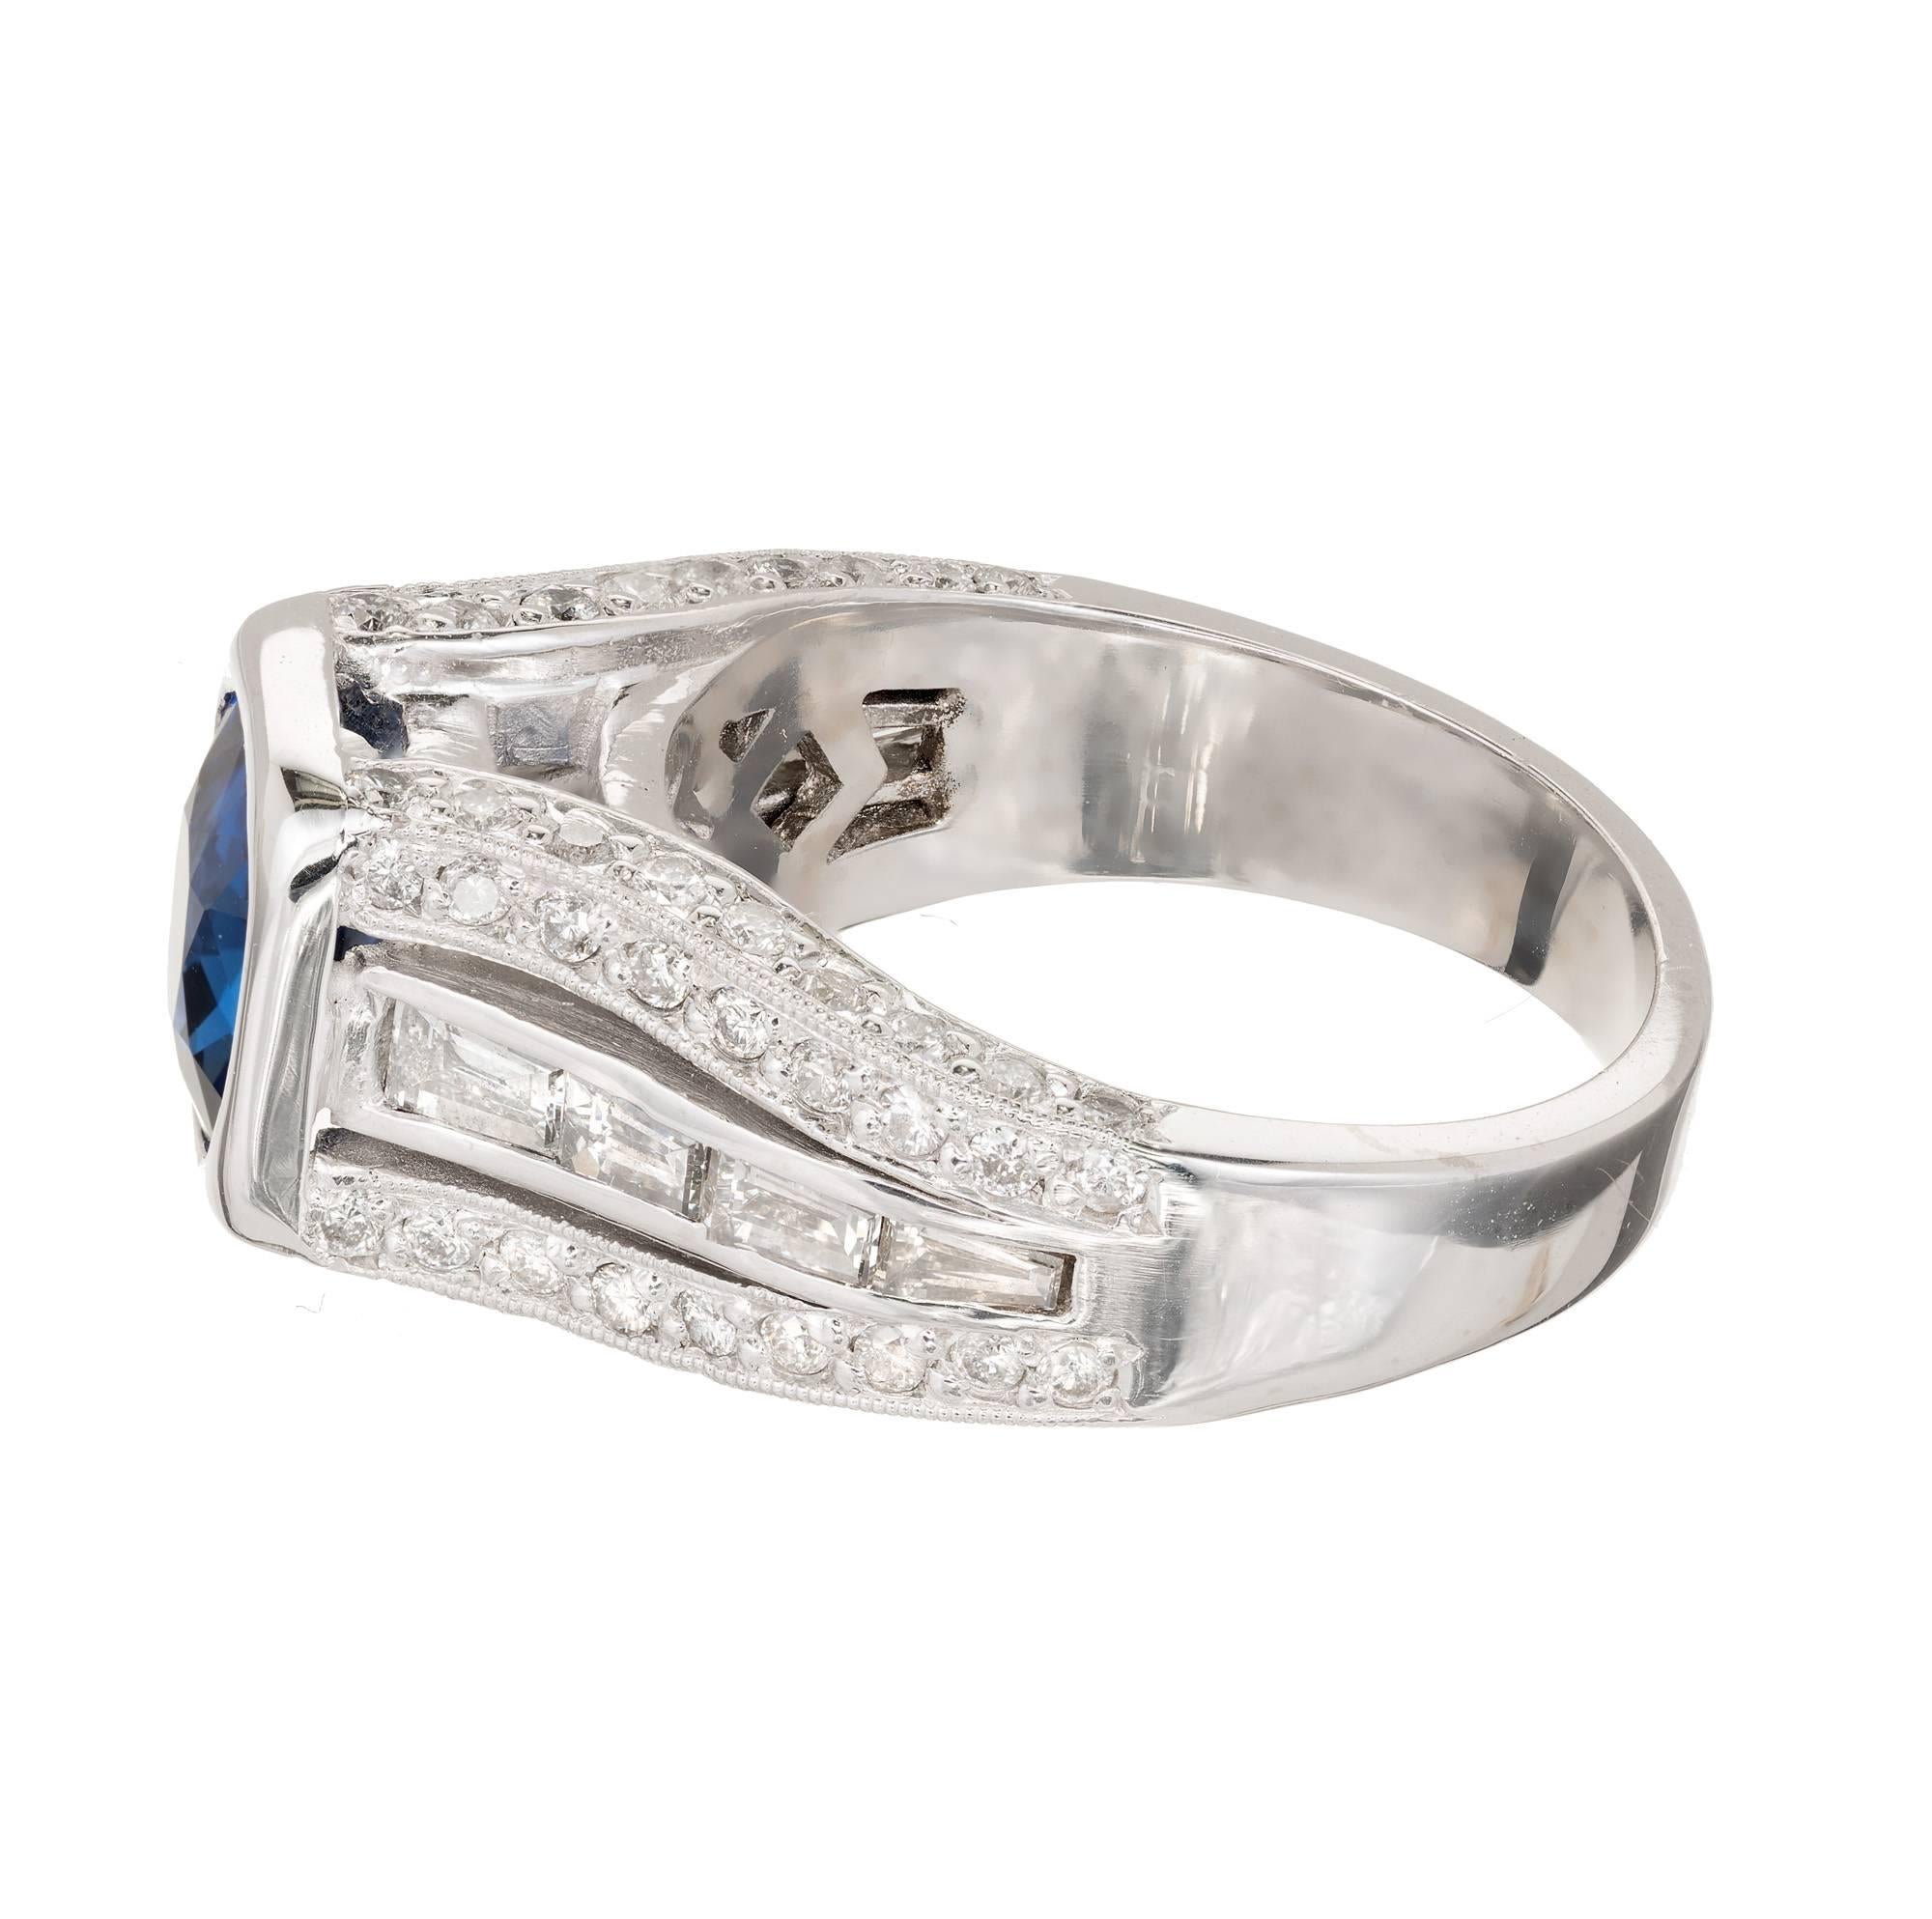 Peter Suchy 1.98 Carat Cushion Cut Sapphire Diamond Platinum Engagement Ring For Sale 2